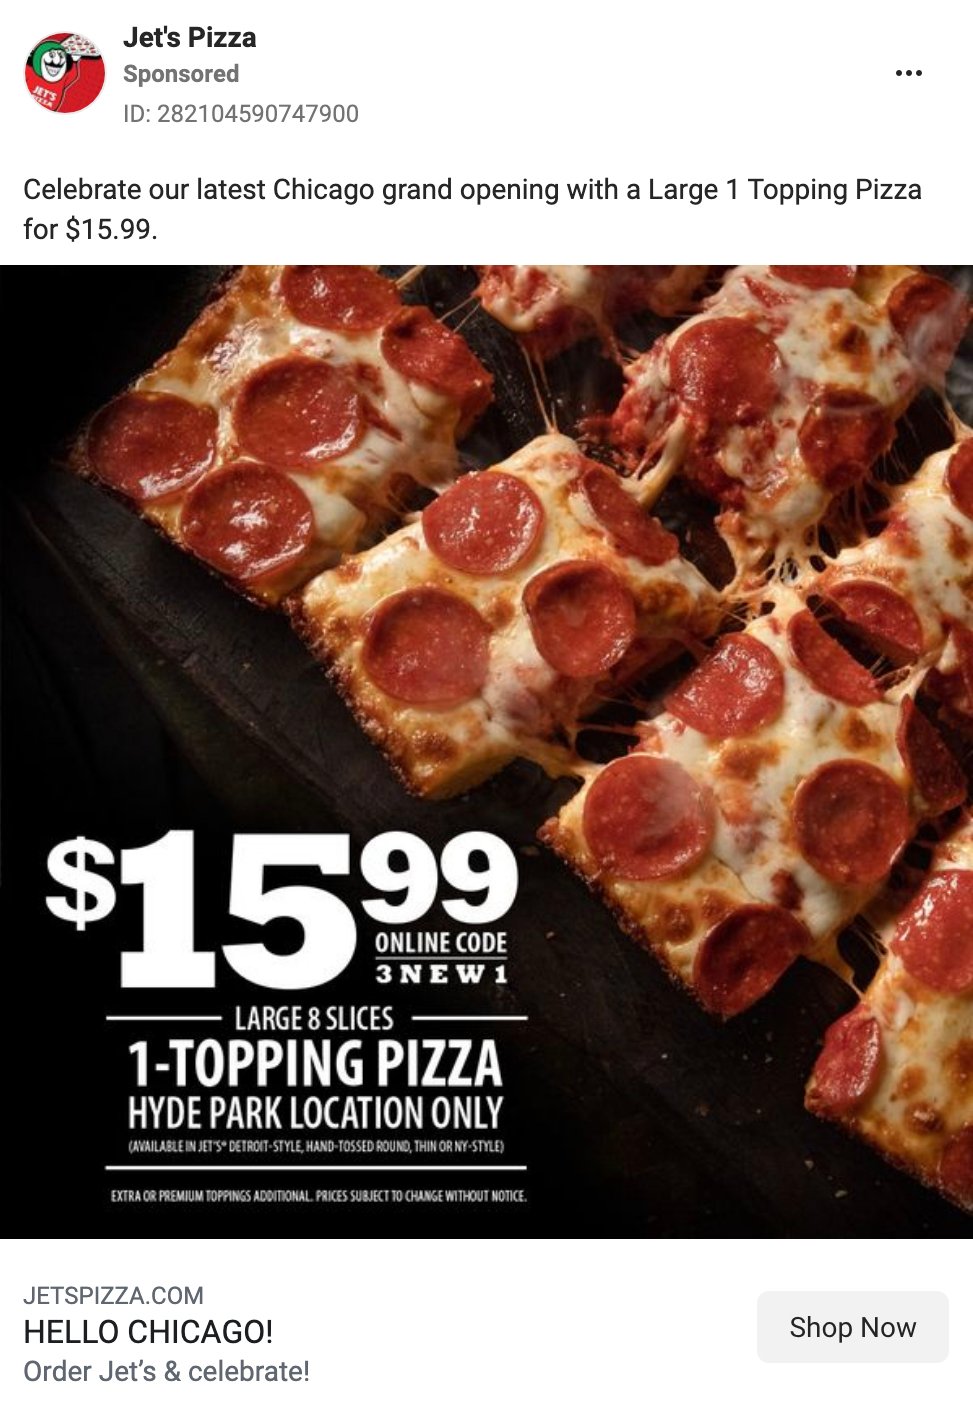 Jet's Pizza location specific Facebook ad